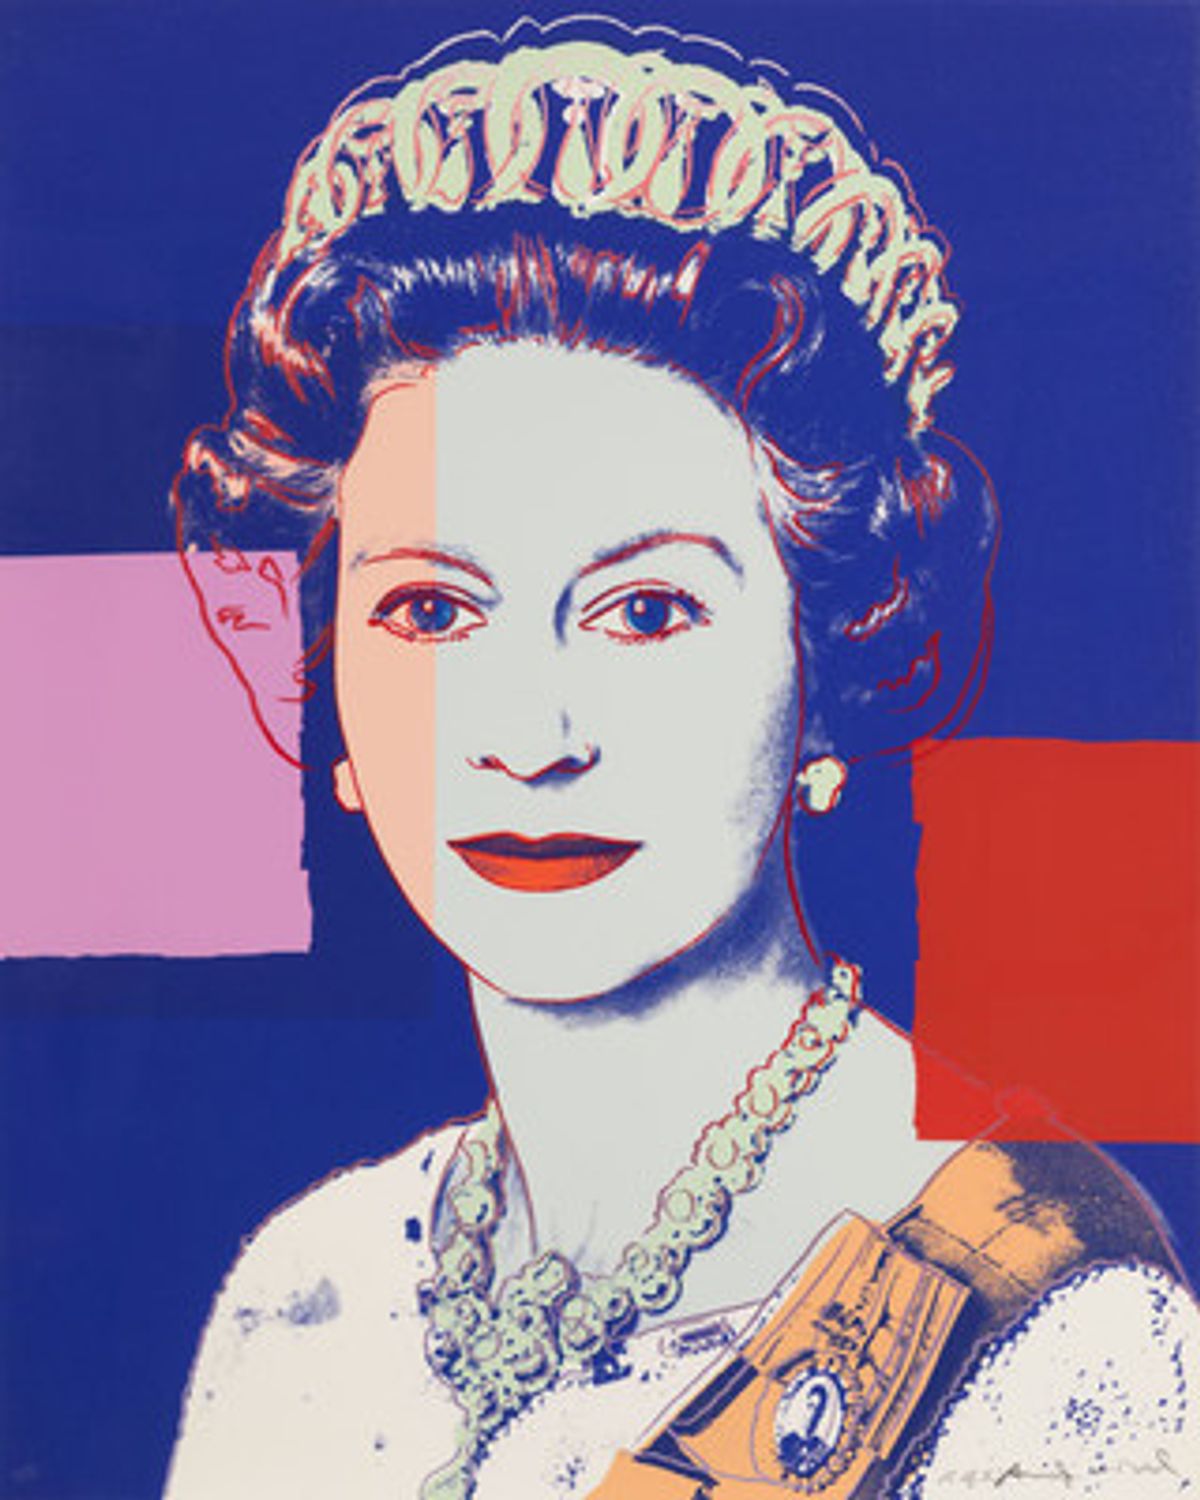 An Andy Warhol silkscreen print of Queen Elizabeth II has broken an auction record for a print by the artist